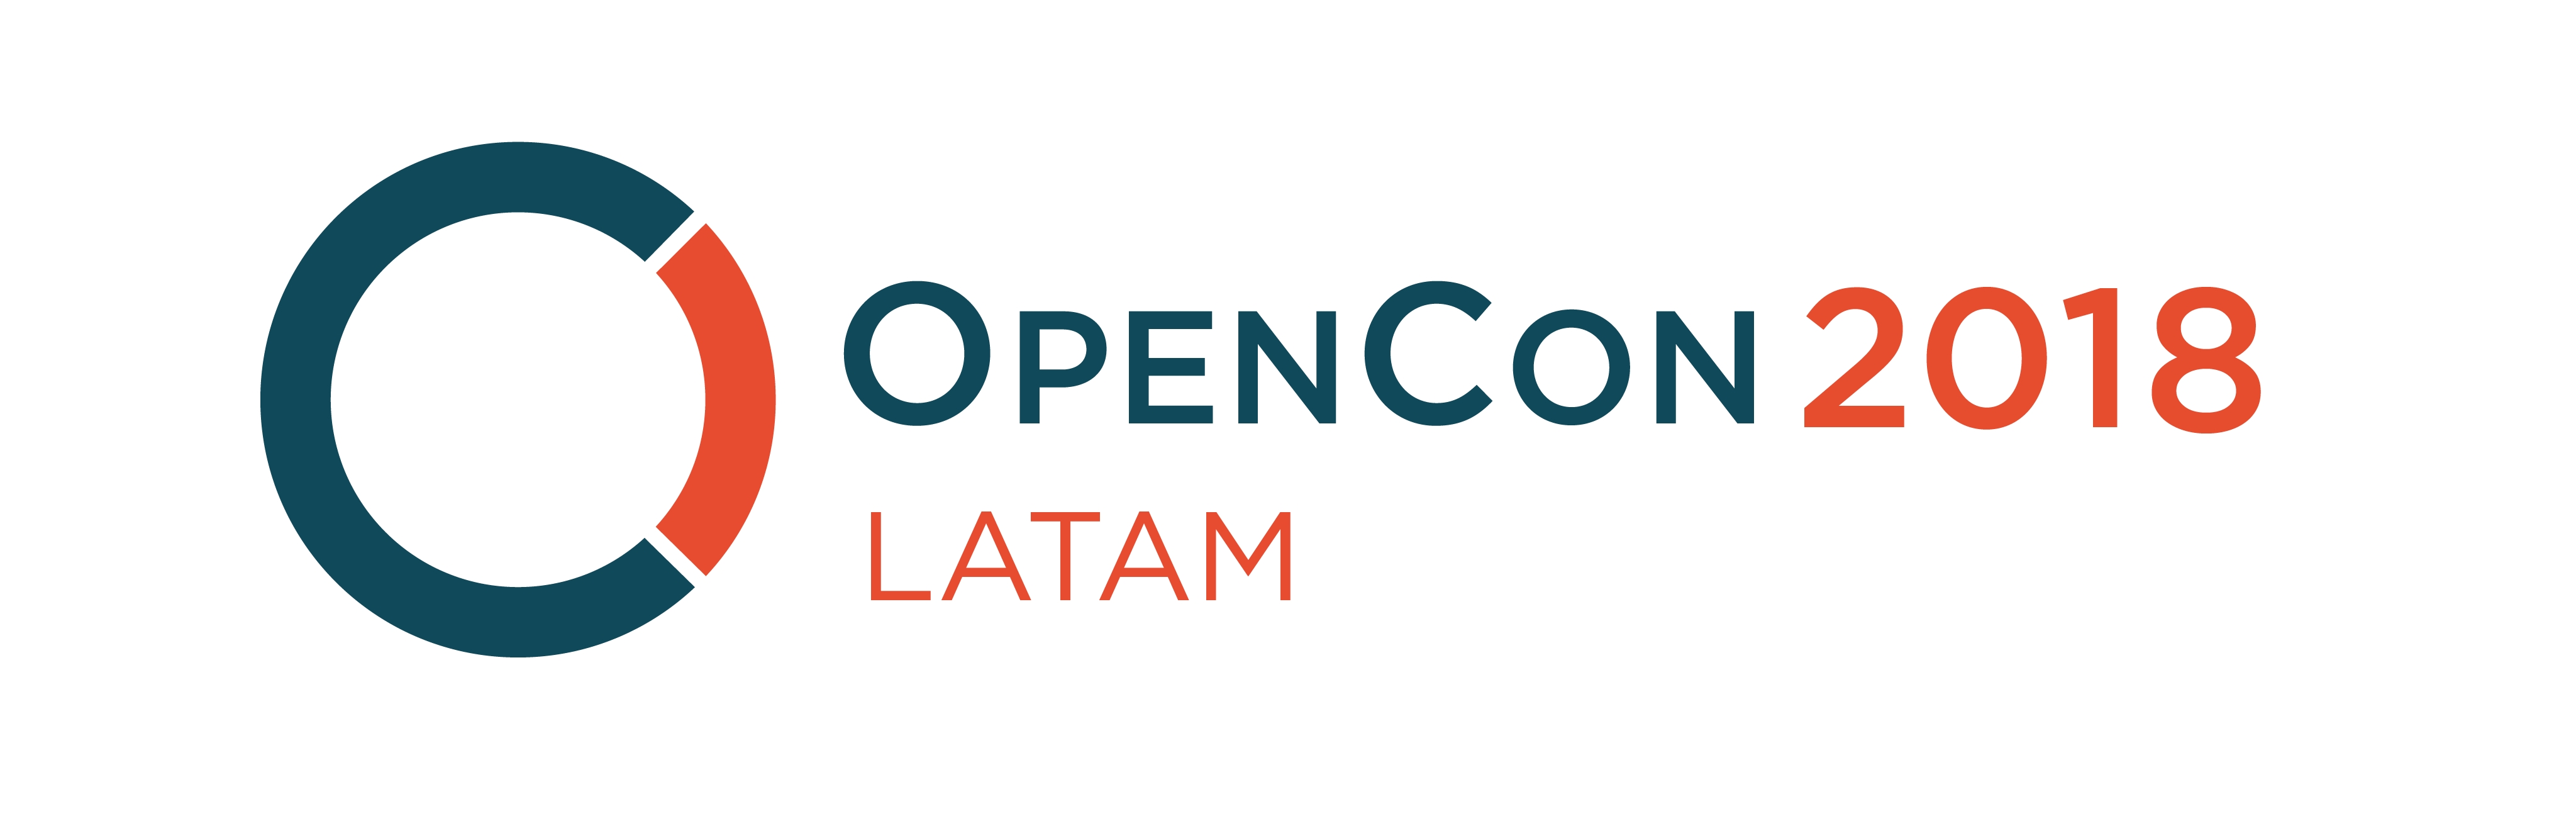 openconlatam_logo